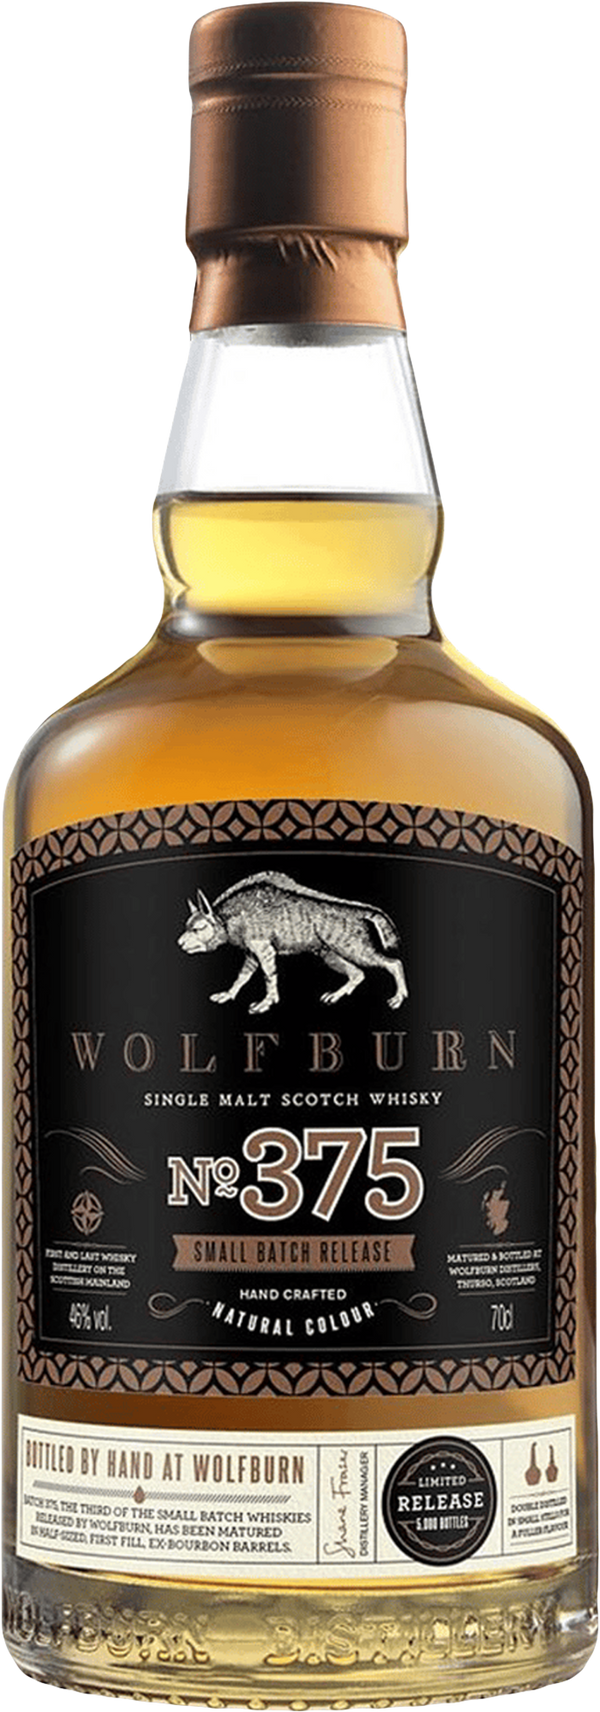 Wolfburn Batch 375 Single Malt Scotch Whisky